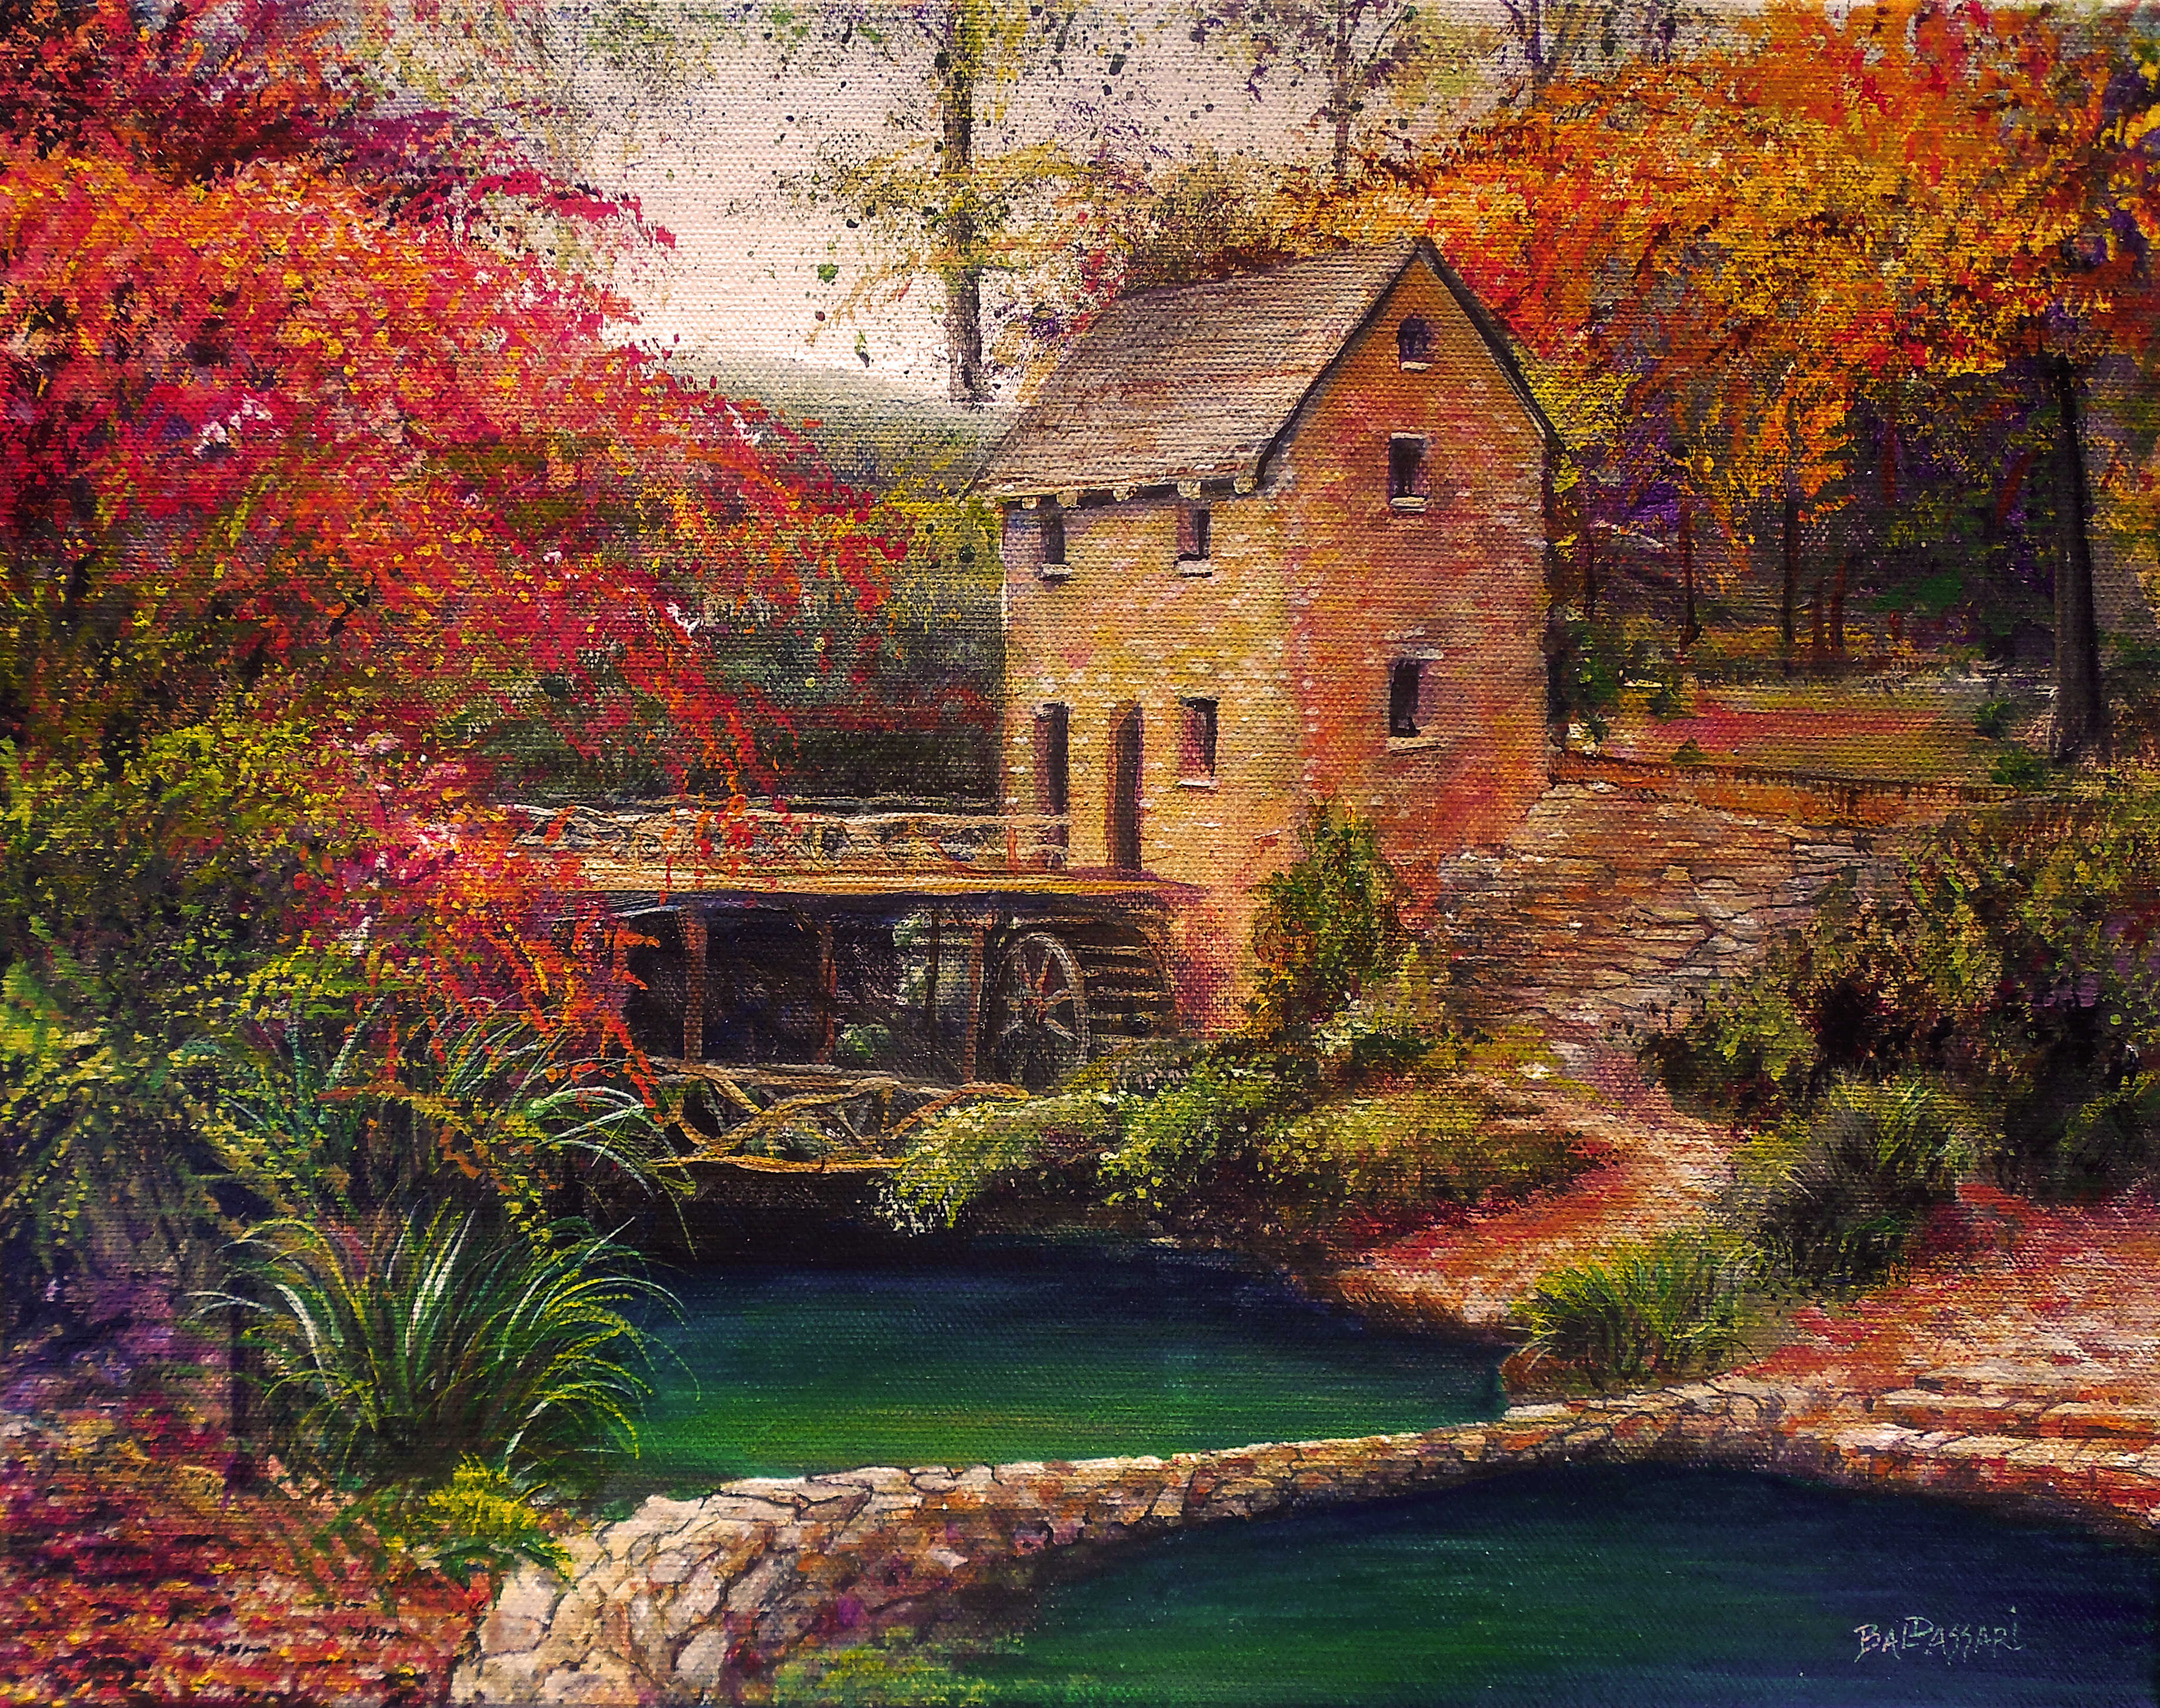 The Little Rock Mill by Scott Baldassari